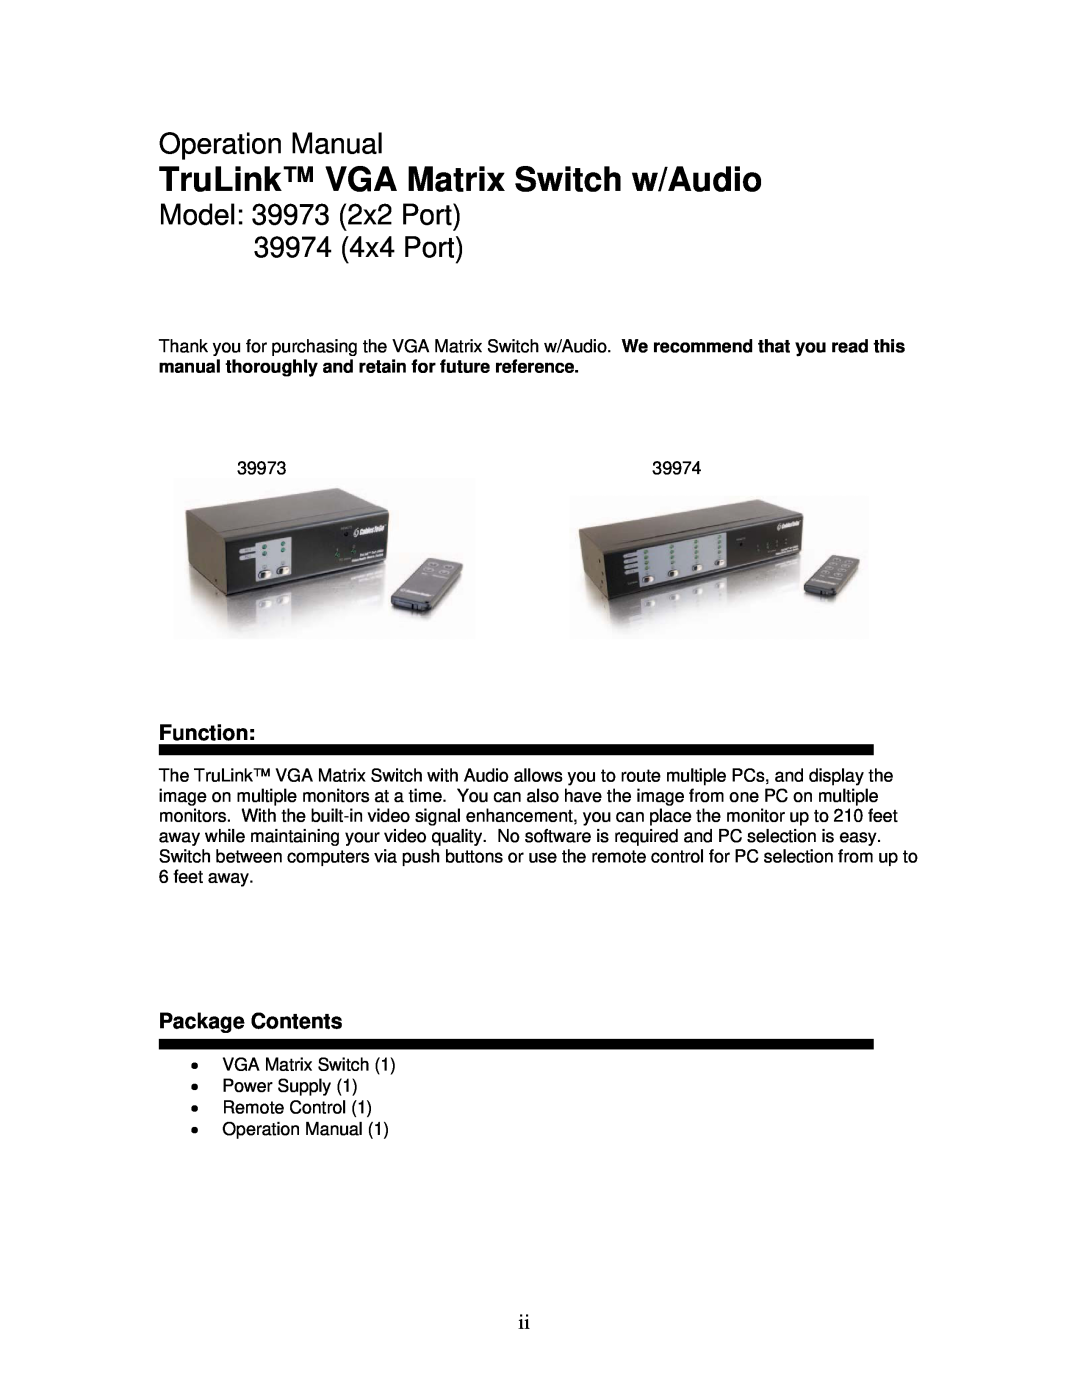 Cables to Go operation manual Operation Manual, Model 39973 2x2 Port 39974 4x4 Port, TruLink VGA Matrix Switch w/Audio 